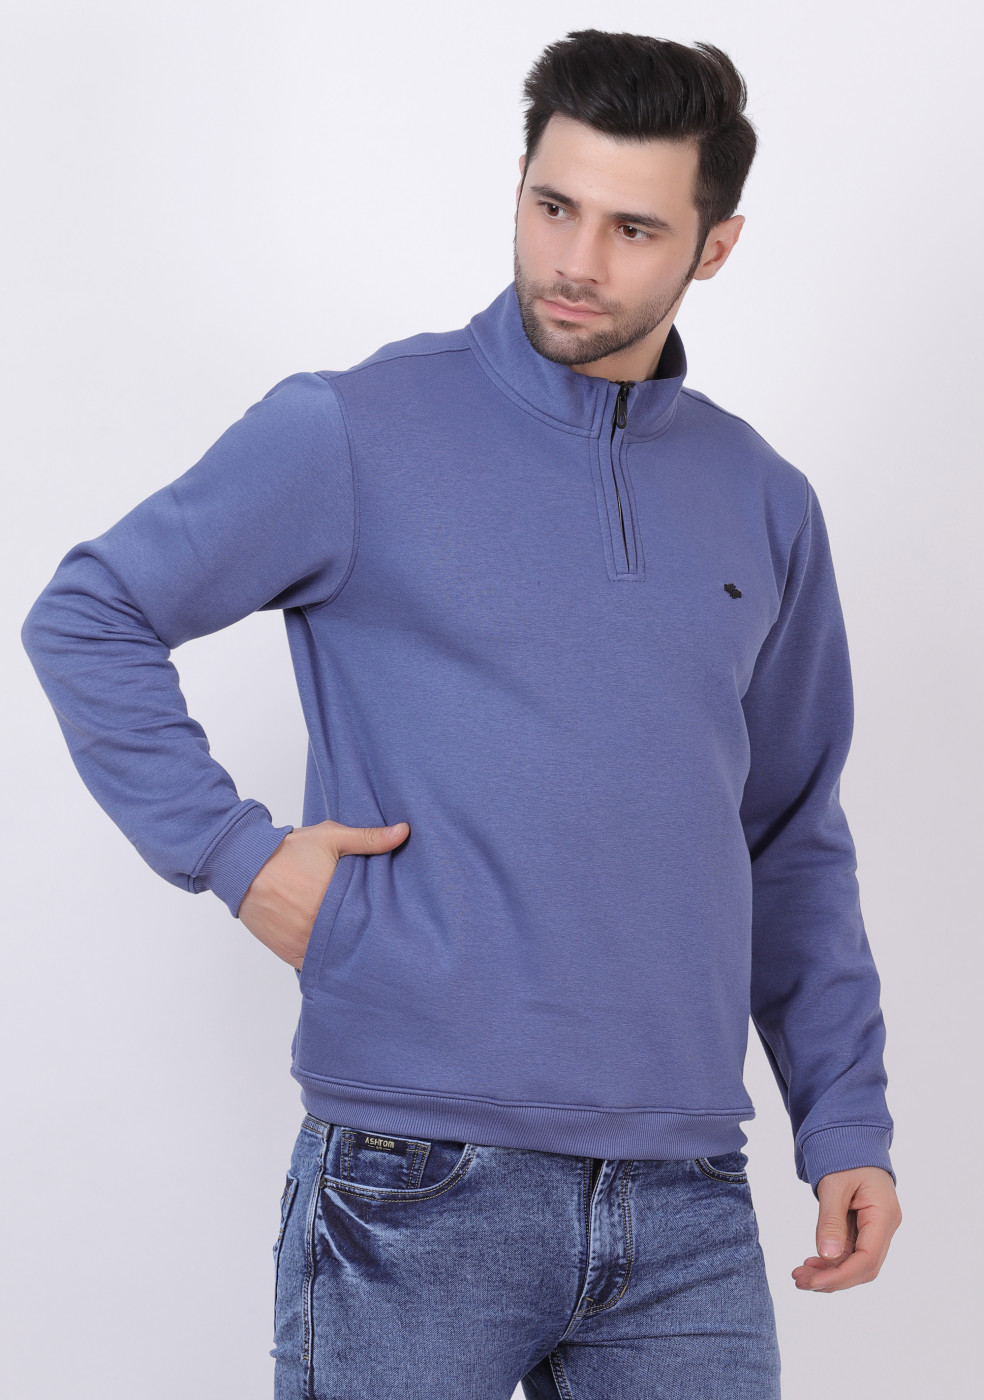 HUKH Half Zip Long Sleeve Airforce Sweatshirt For Men